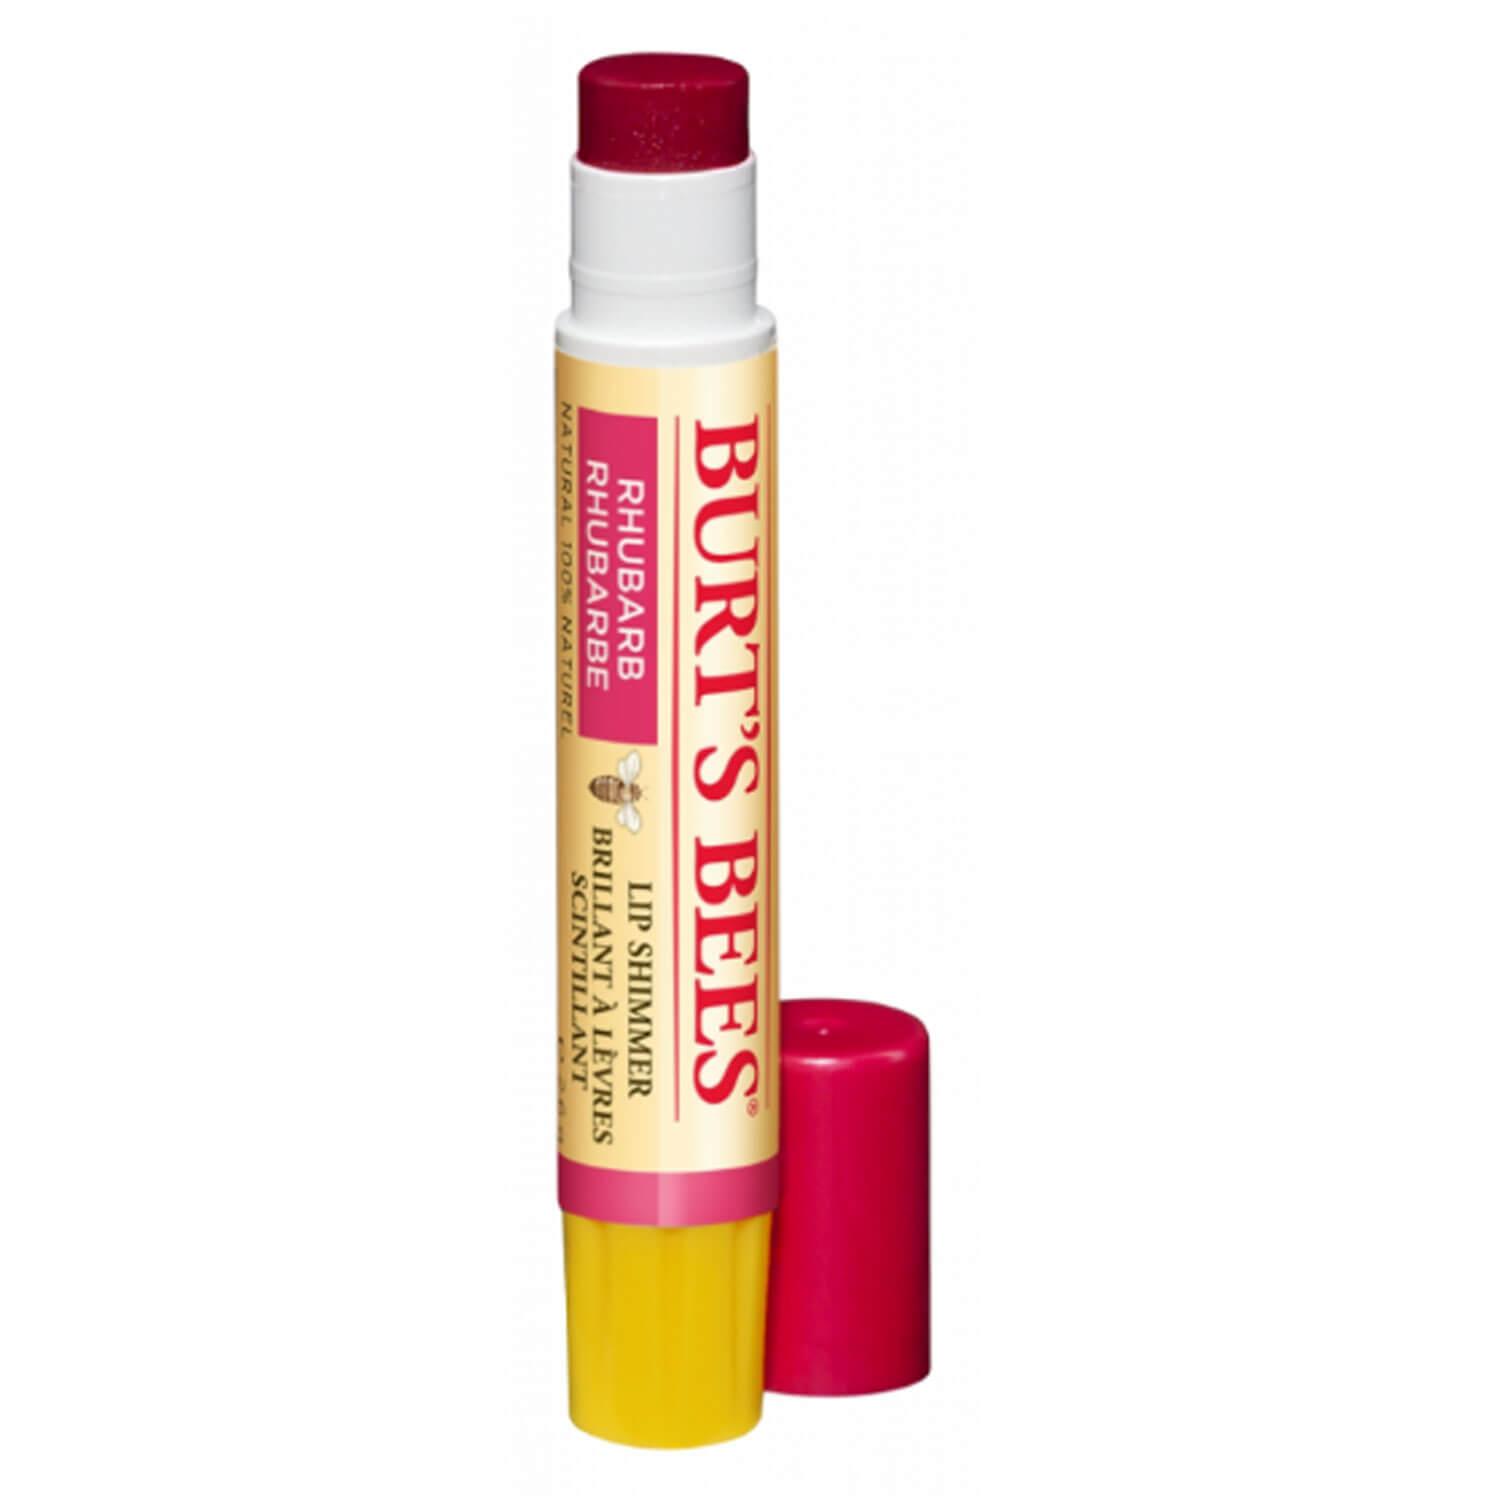 Burt's Bees - Lip Shimmer Rhubarb